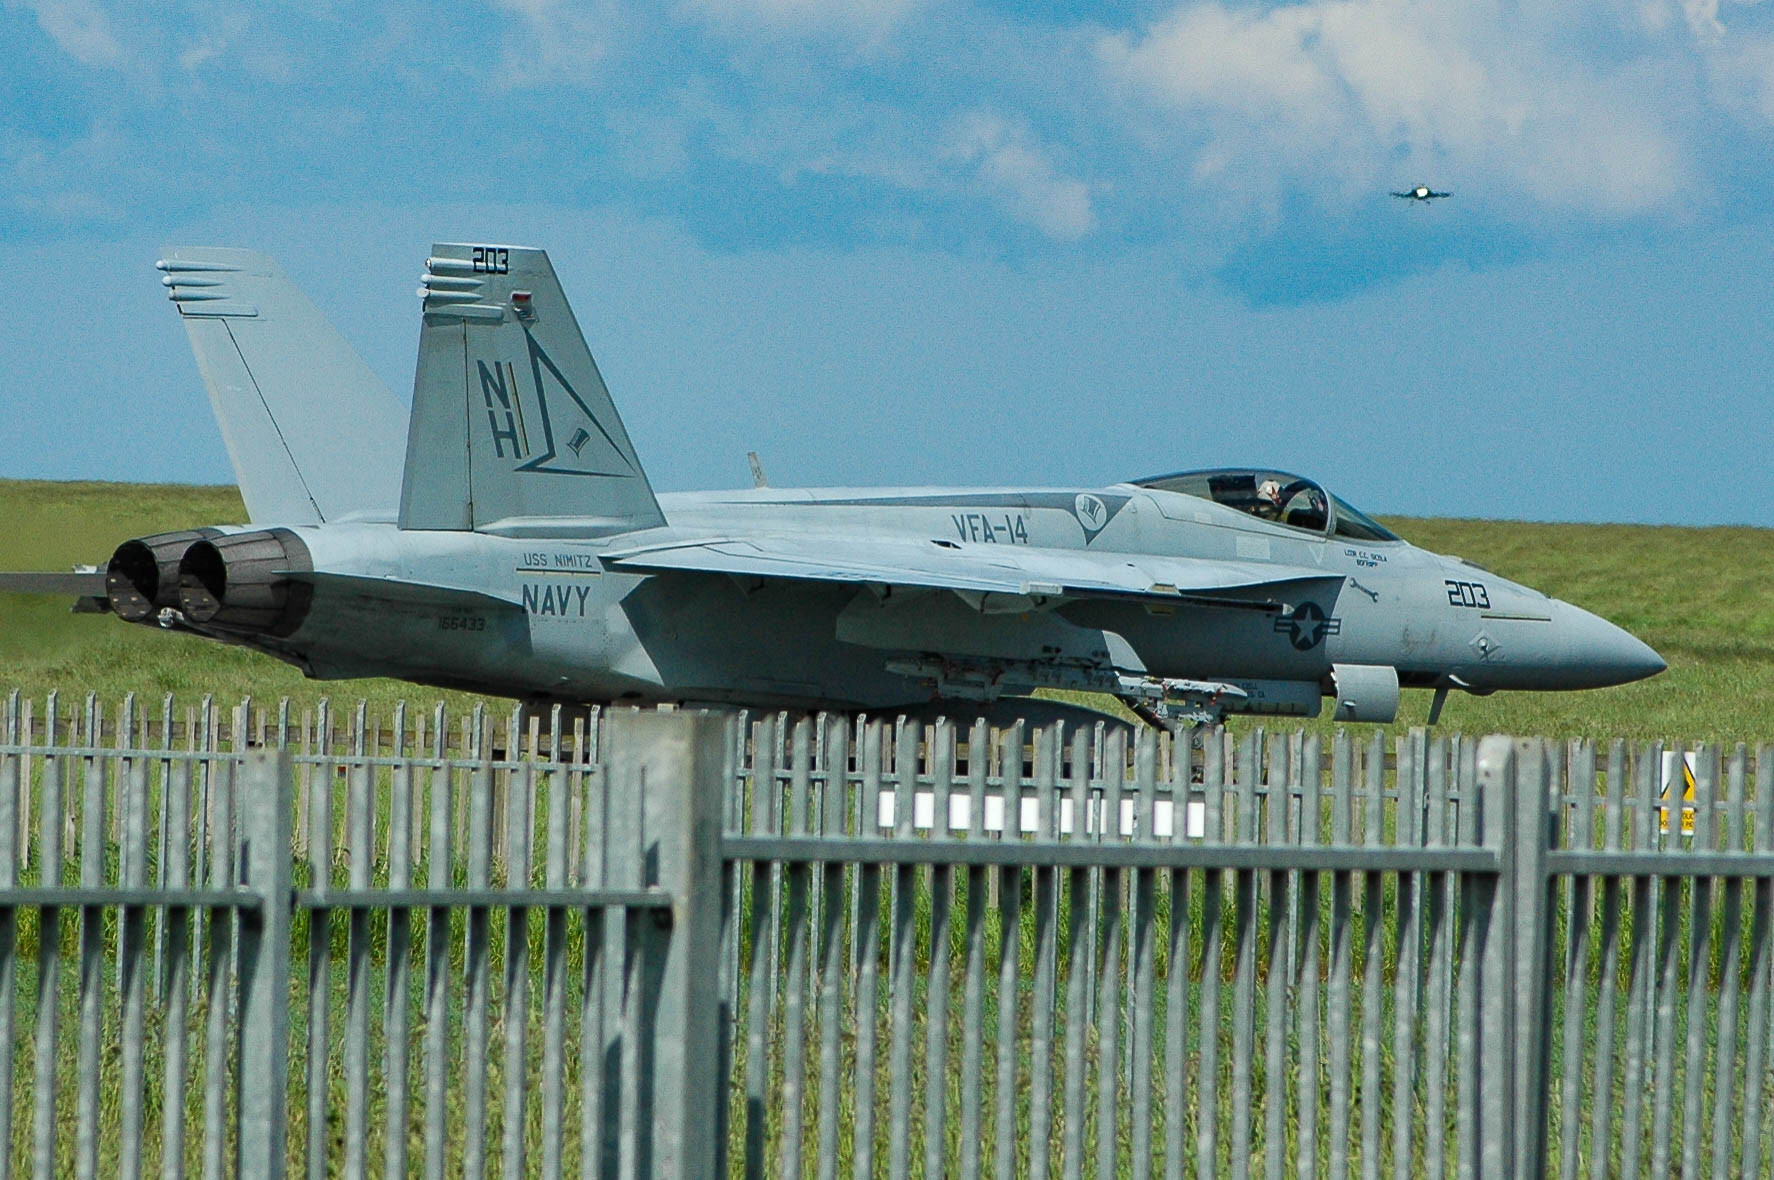 166433/166433 USN - United States Navy McDonnell-Douglas F/A-18 Hornet Airframe Information - AVSpotters.com